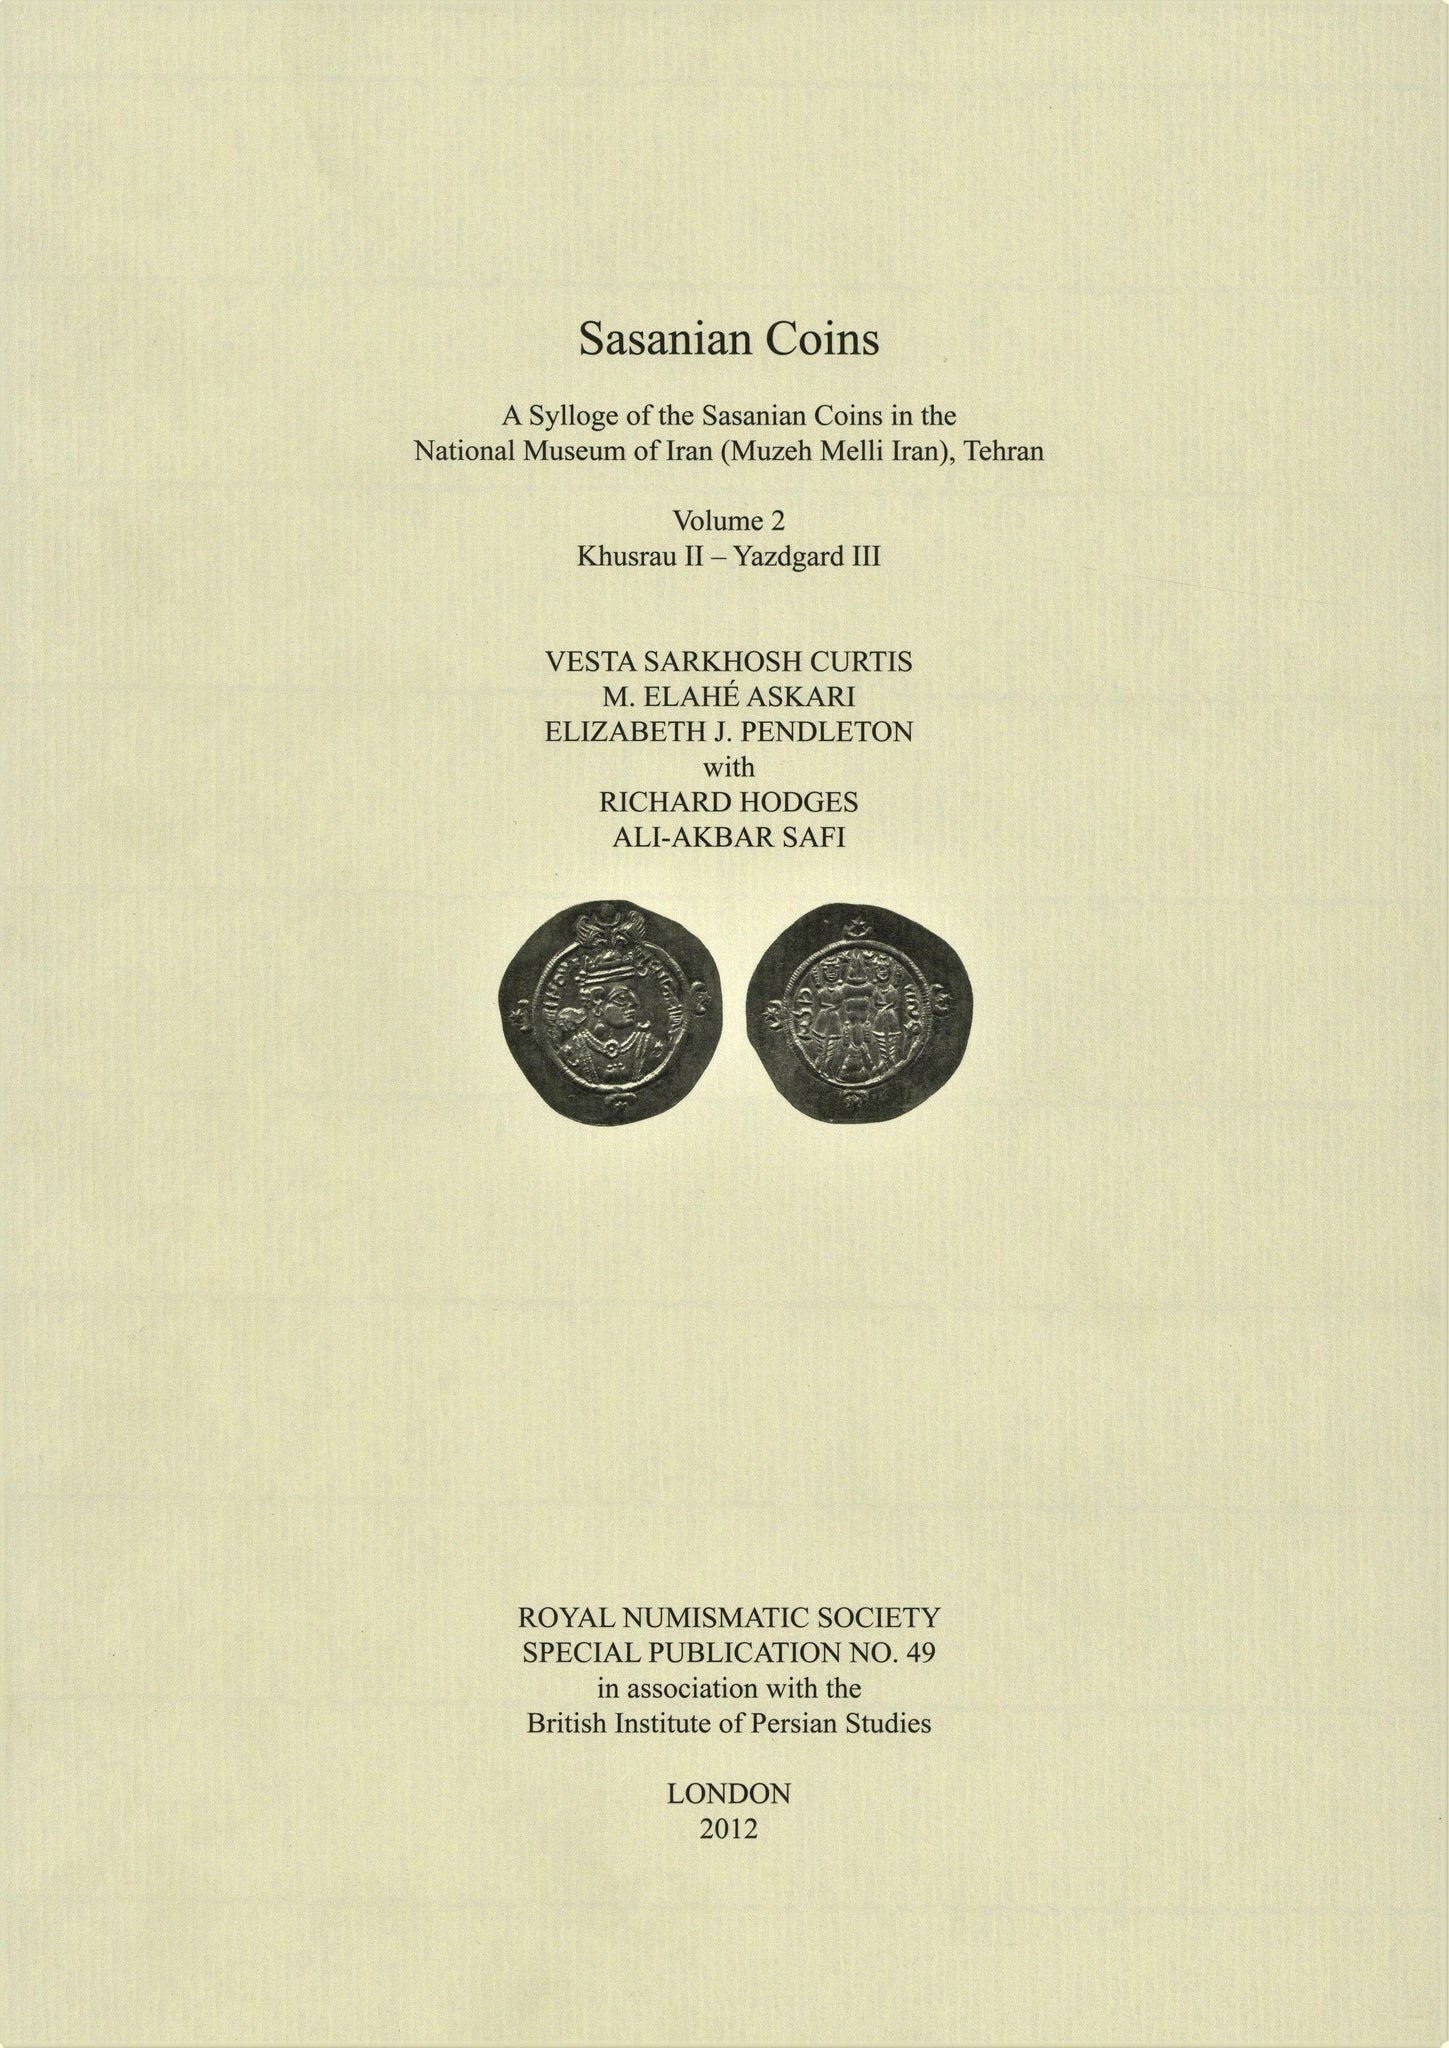 Sylloge of the Sasanian coins in the National Museum of Iran: Volume 2 (Khusrau II - Yazgard III), by Curtis, V.S., Askari, M.E. and Pendleton, E.J. RNS SP49